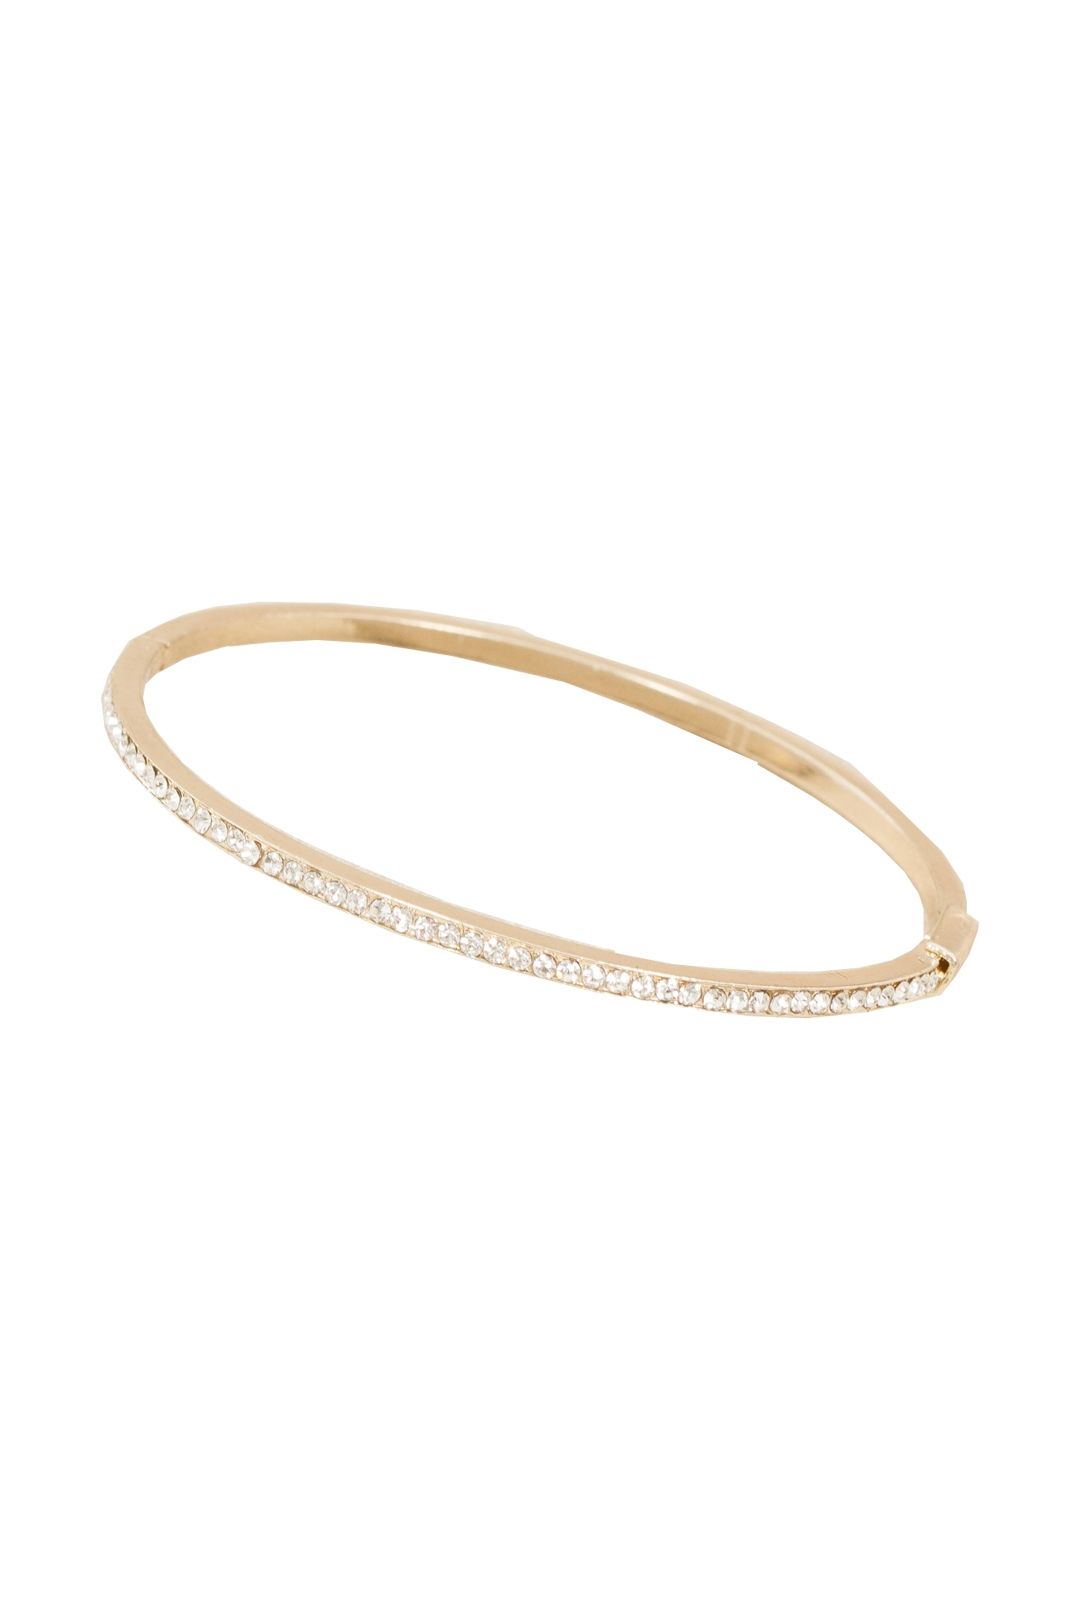 Adorne - Super Fine Diamante Hinge Bracelet - Gold - Front